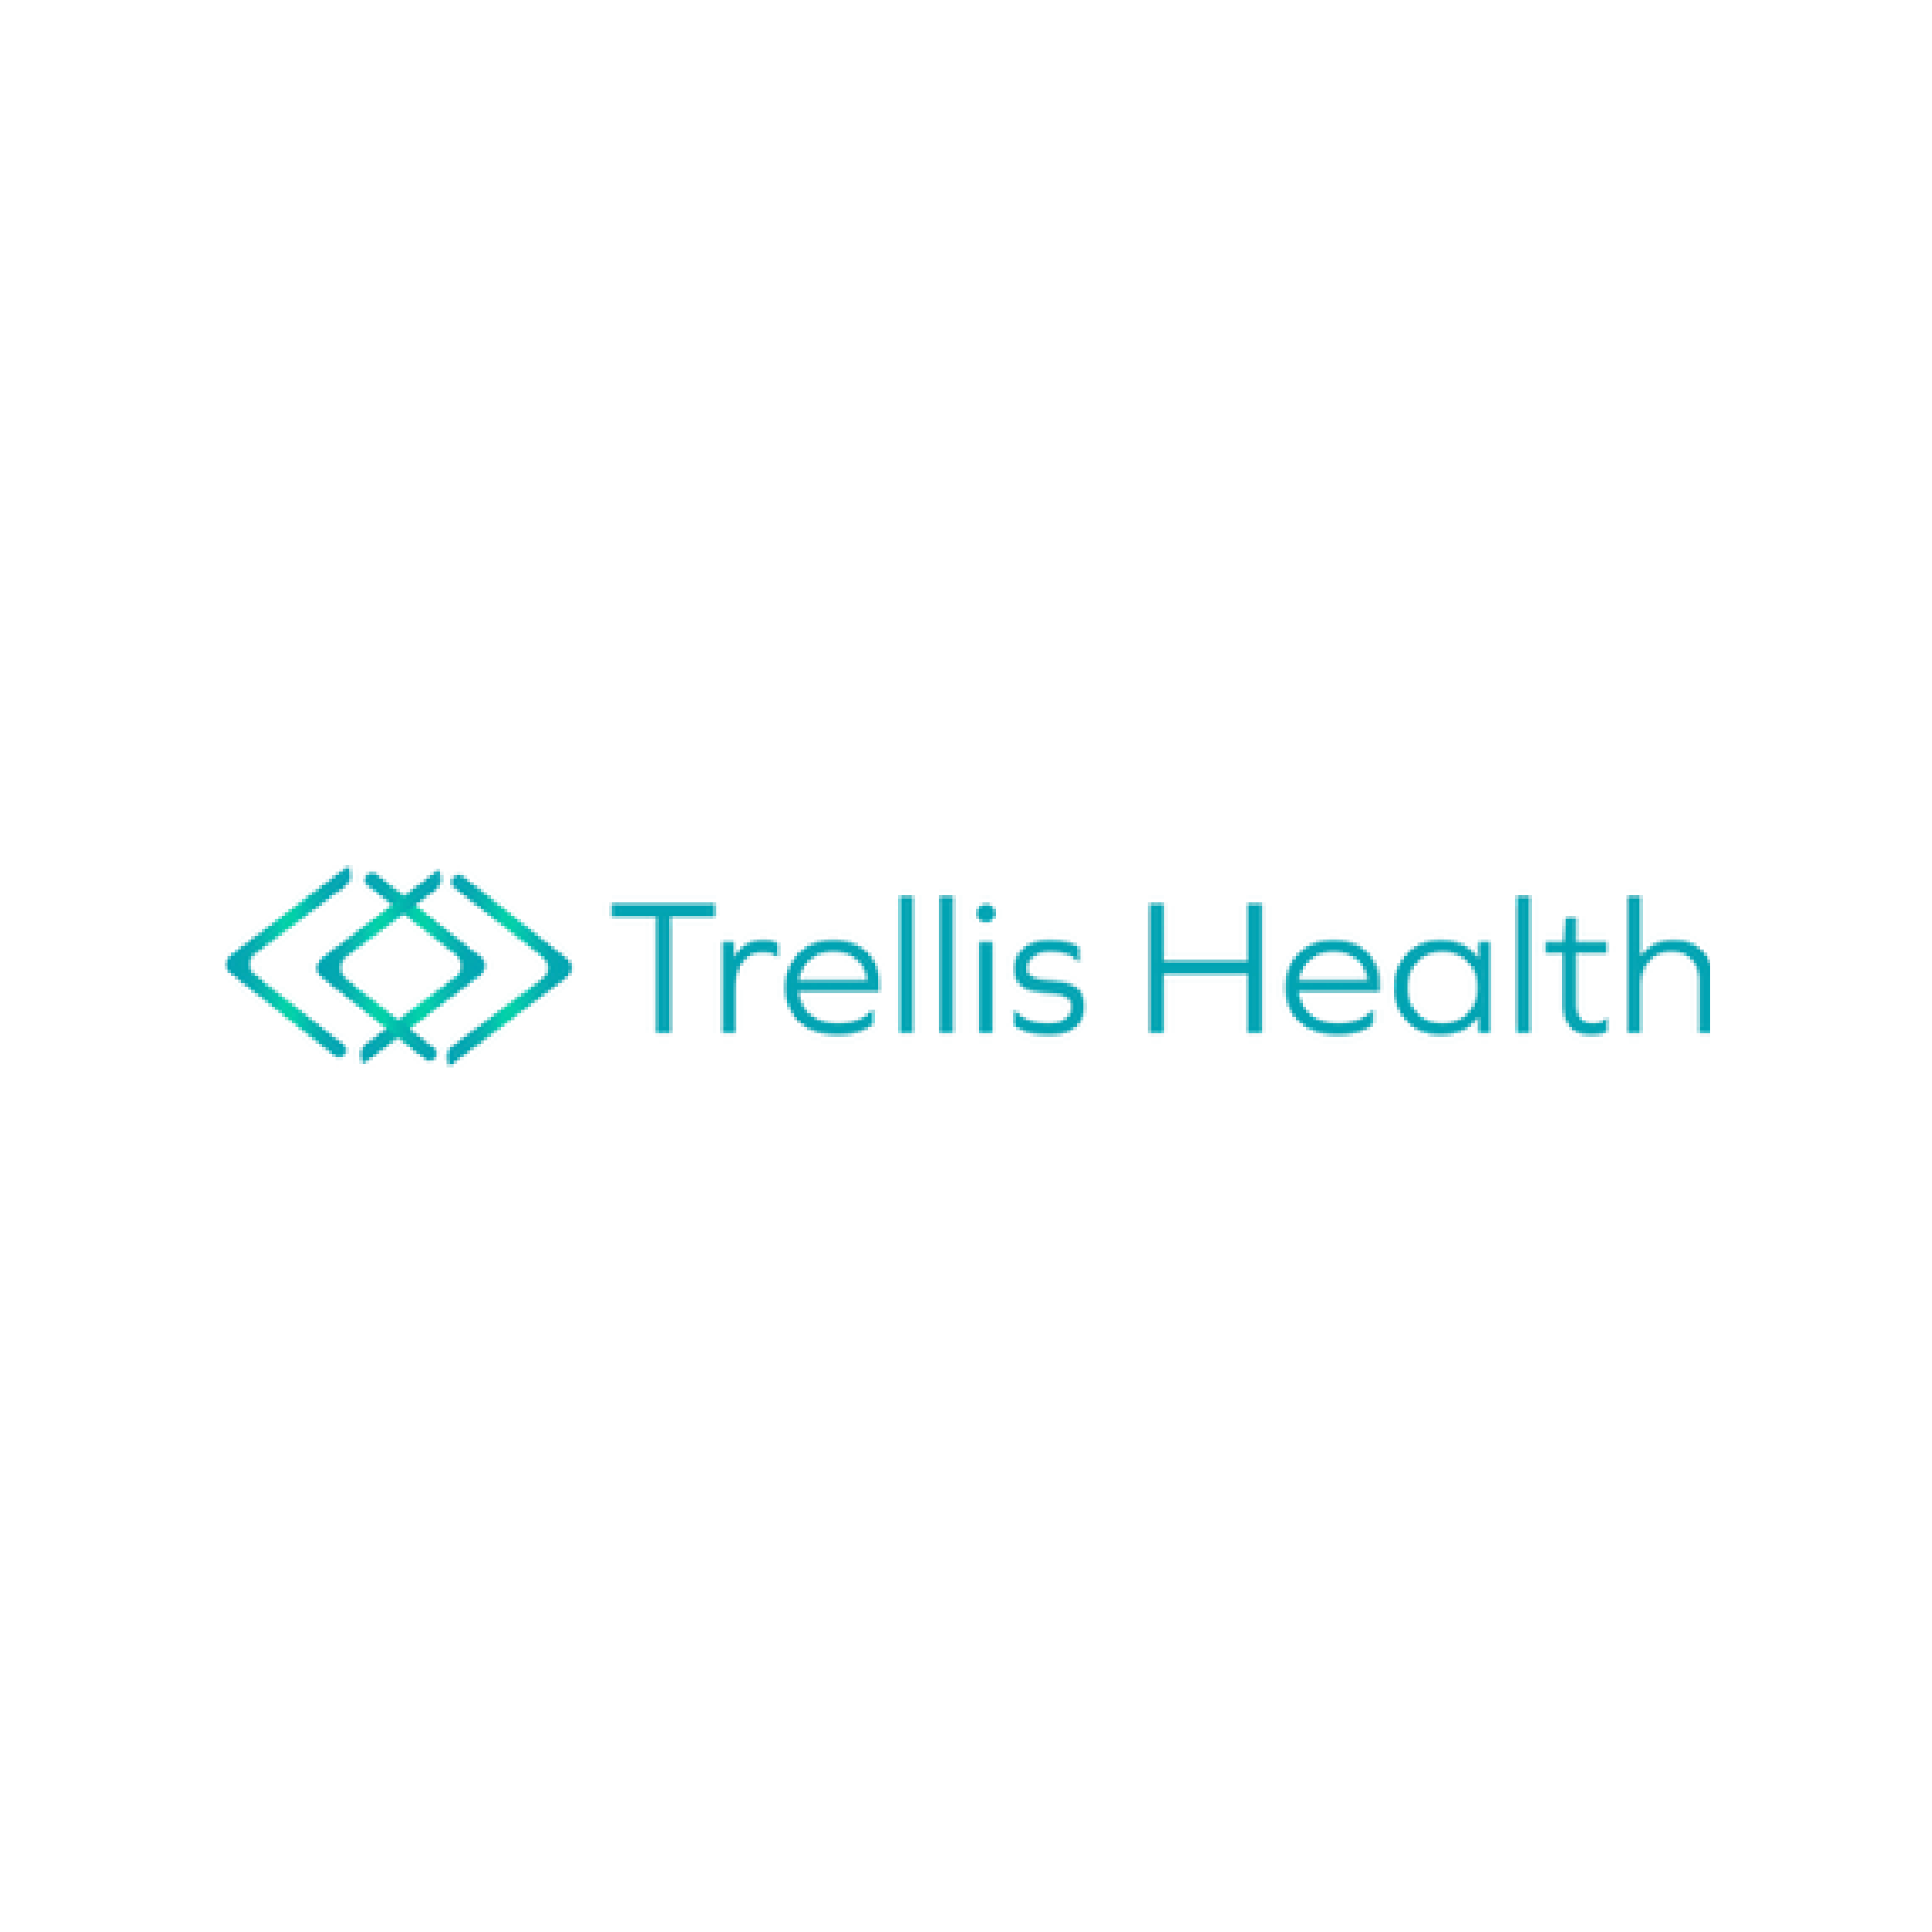 Trellis Health